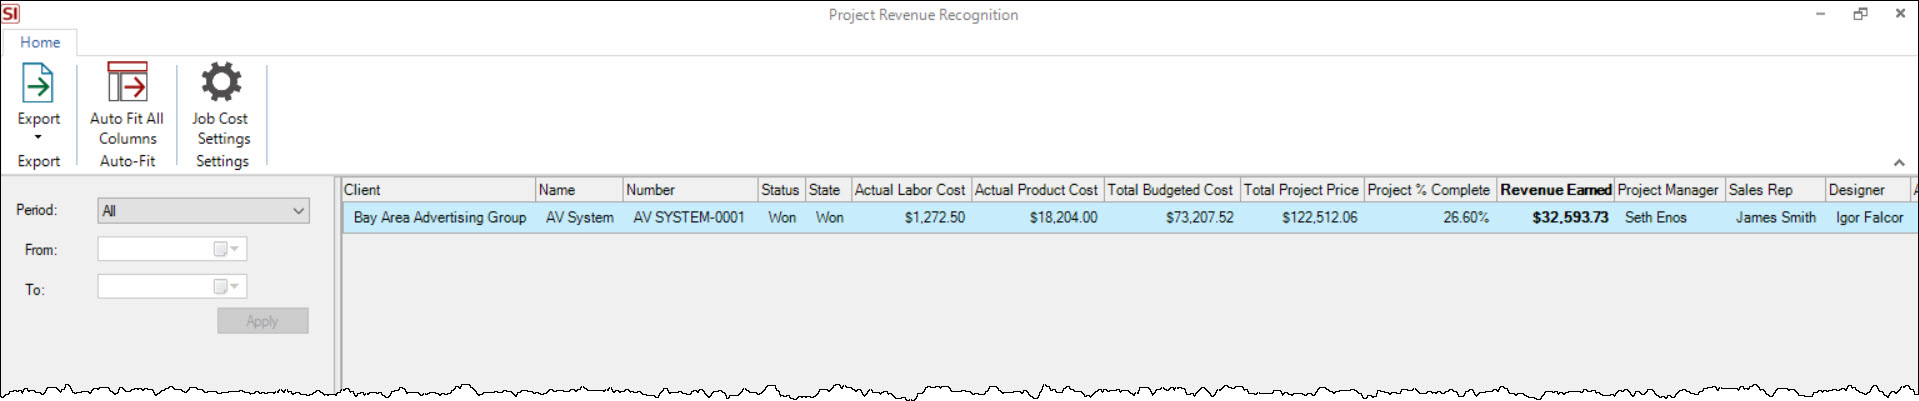 project revenue recognition form.jpg